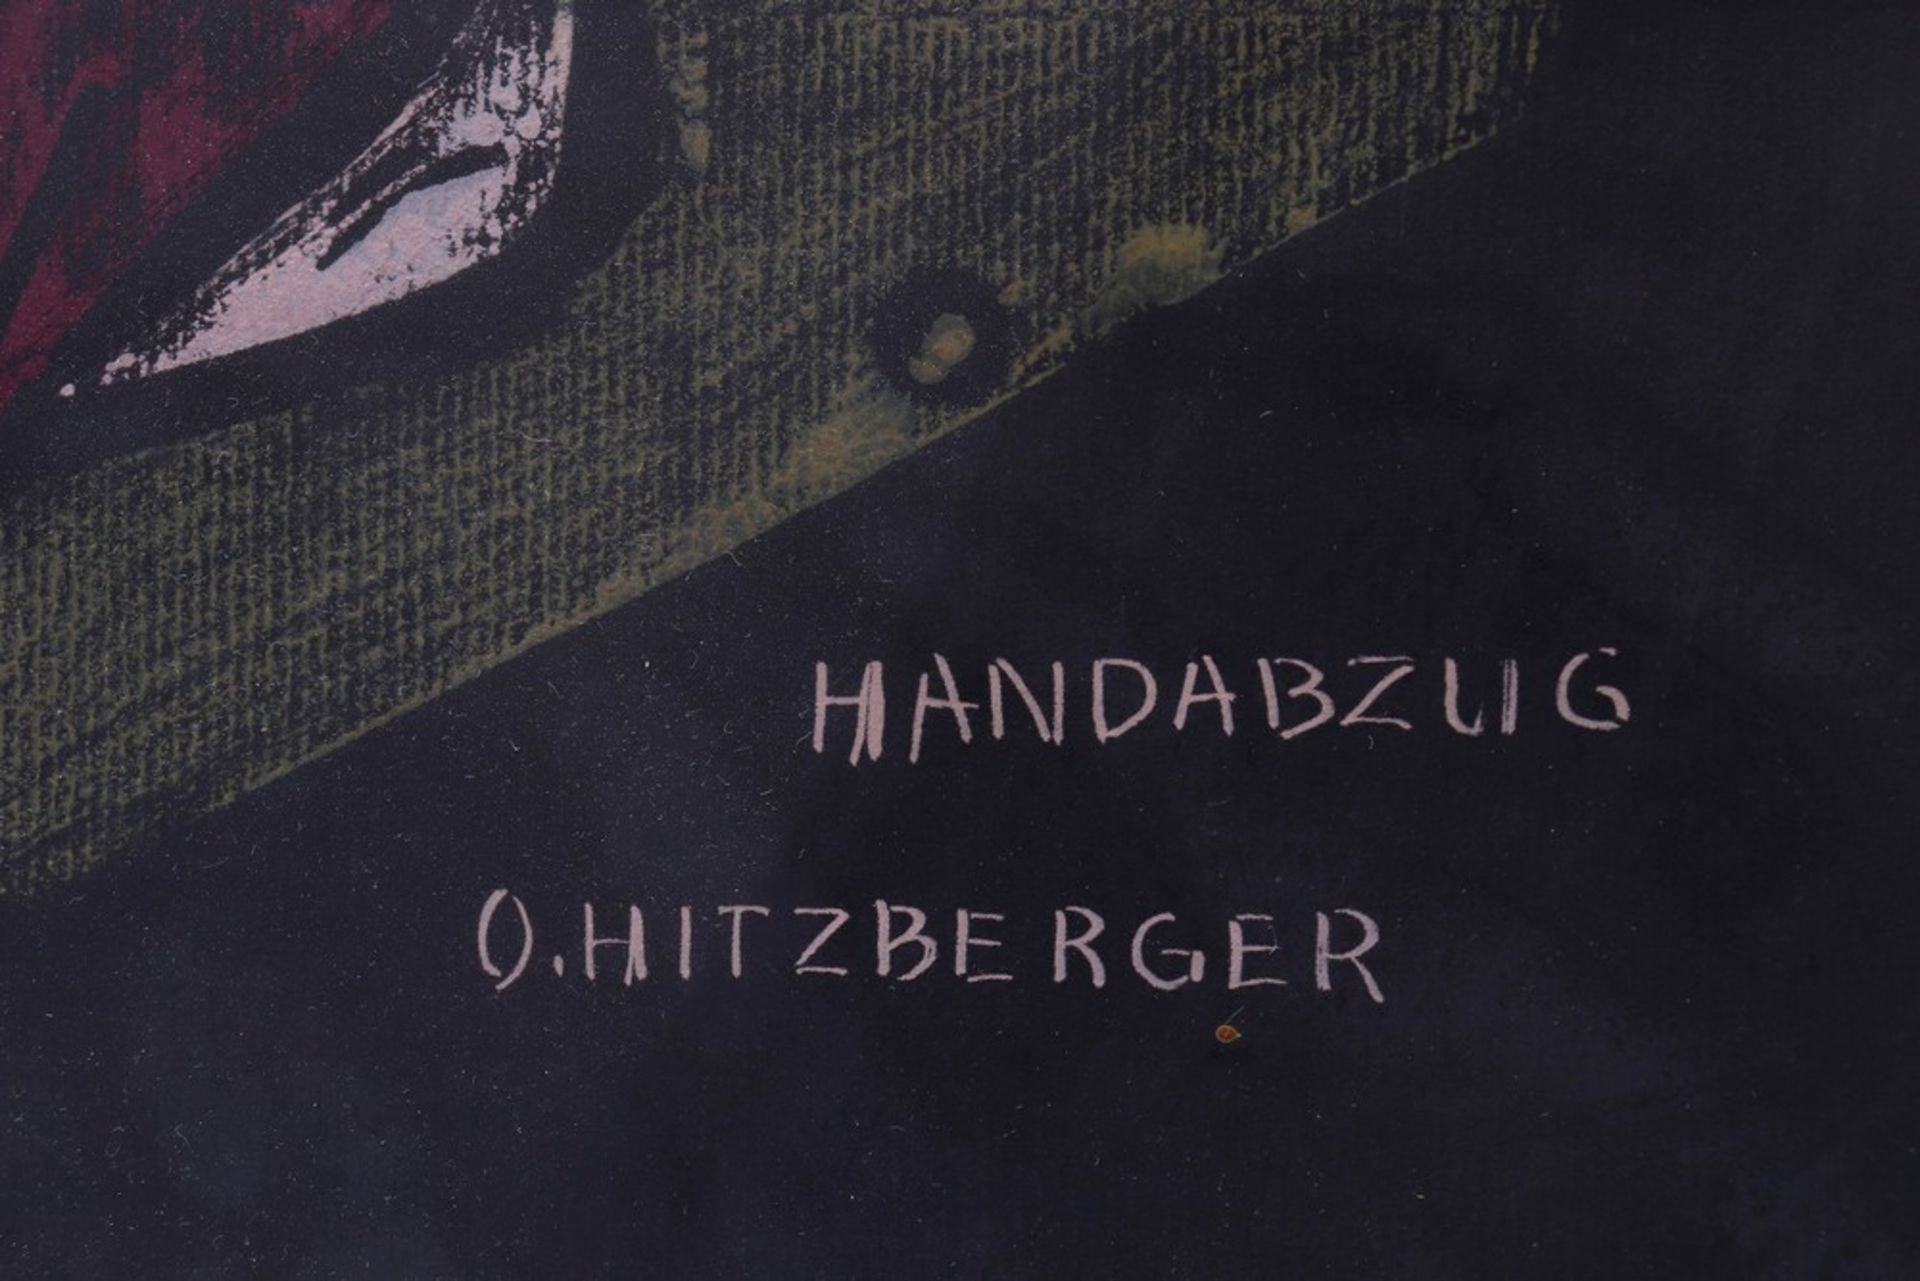 Otto Hitzberger (1878, Munich - 1964, Garmisch-Partenkirchen) - Image 2 of 2